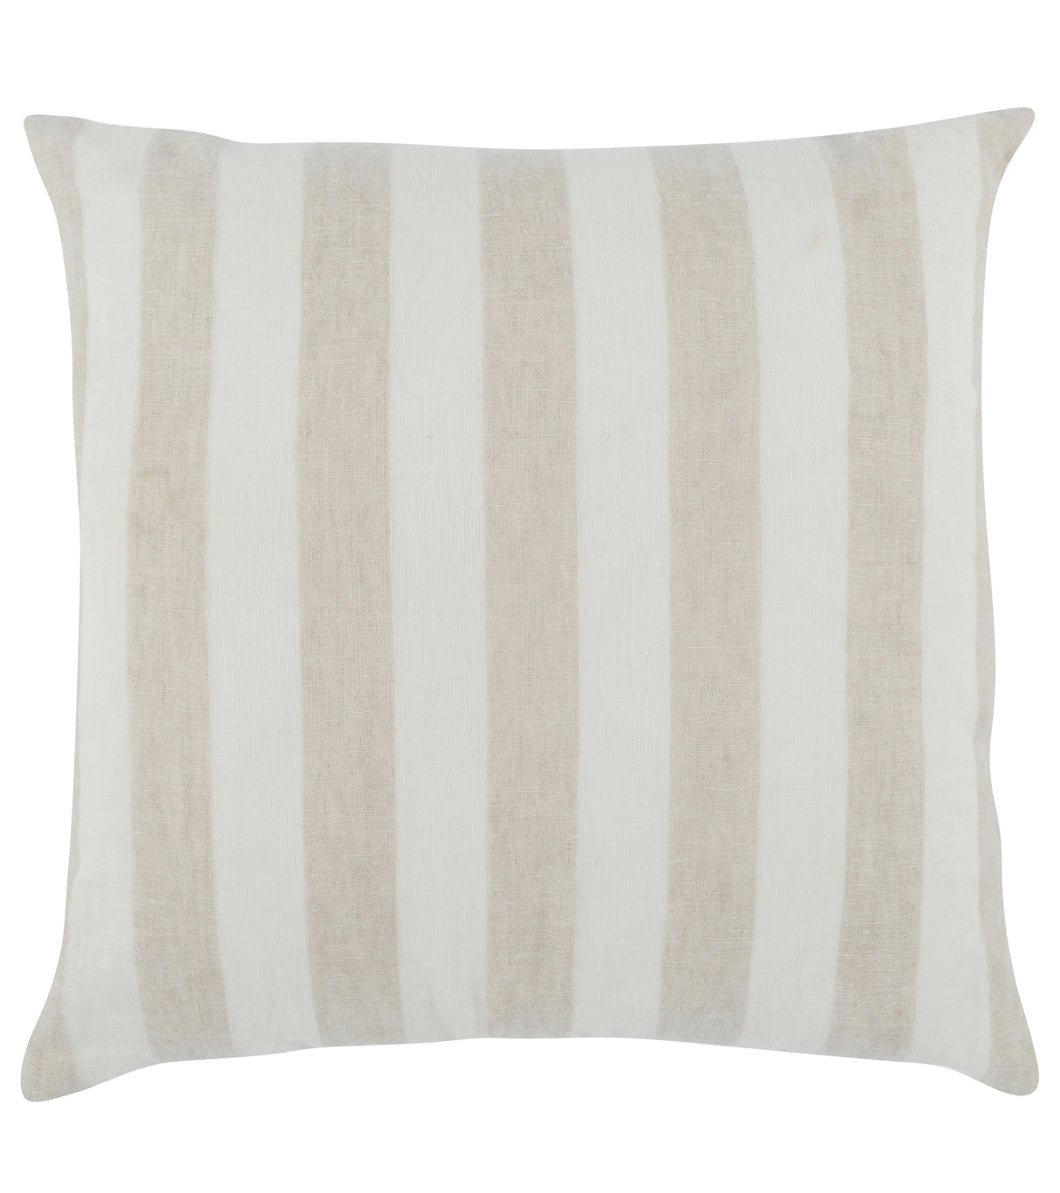 Striped Linen Pillow w/ Down Fill